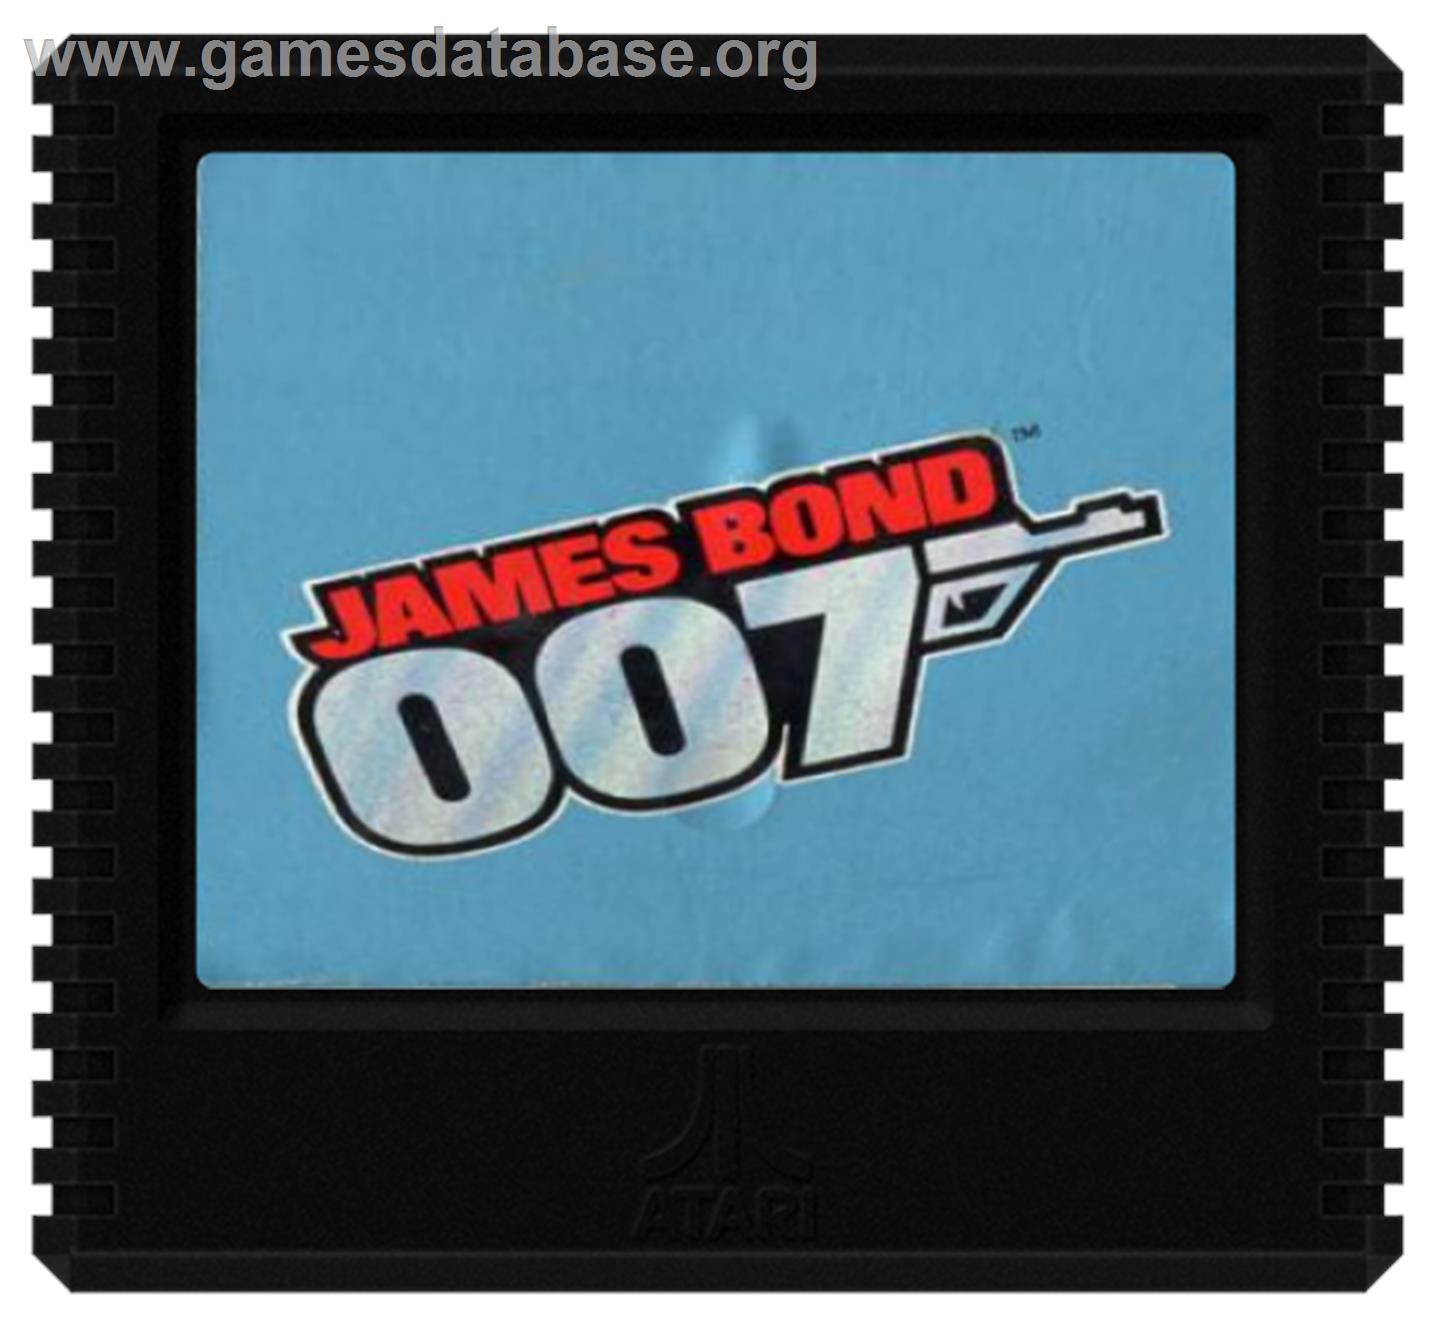 James Bond 007 - Atari 5200 - Artwork - Cartridge